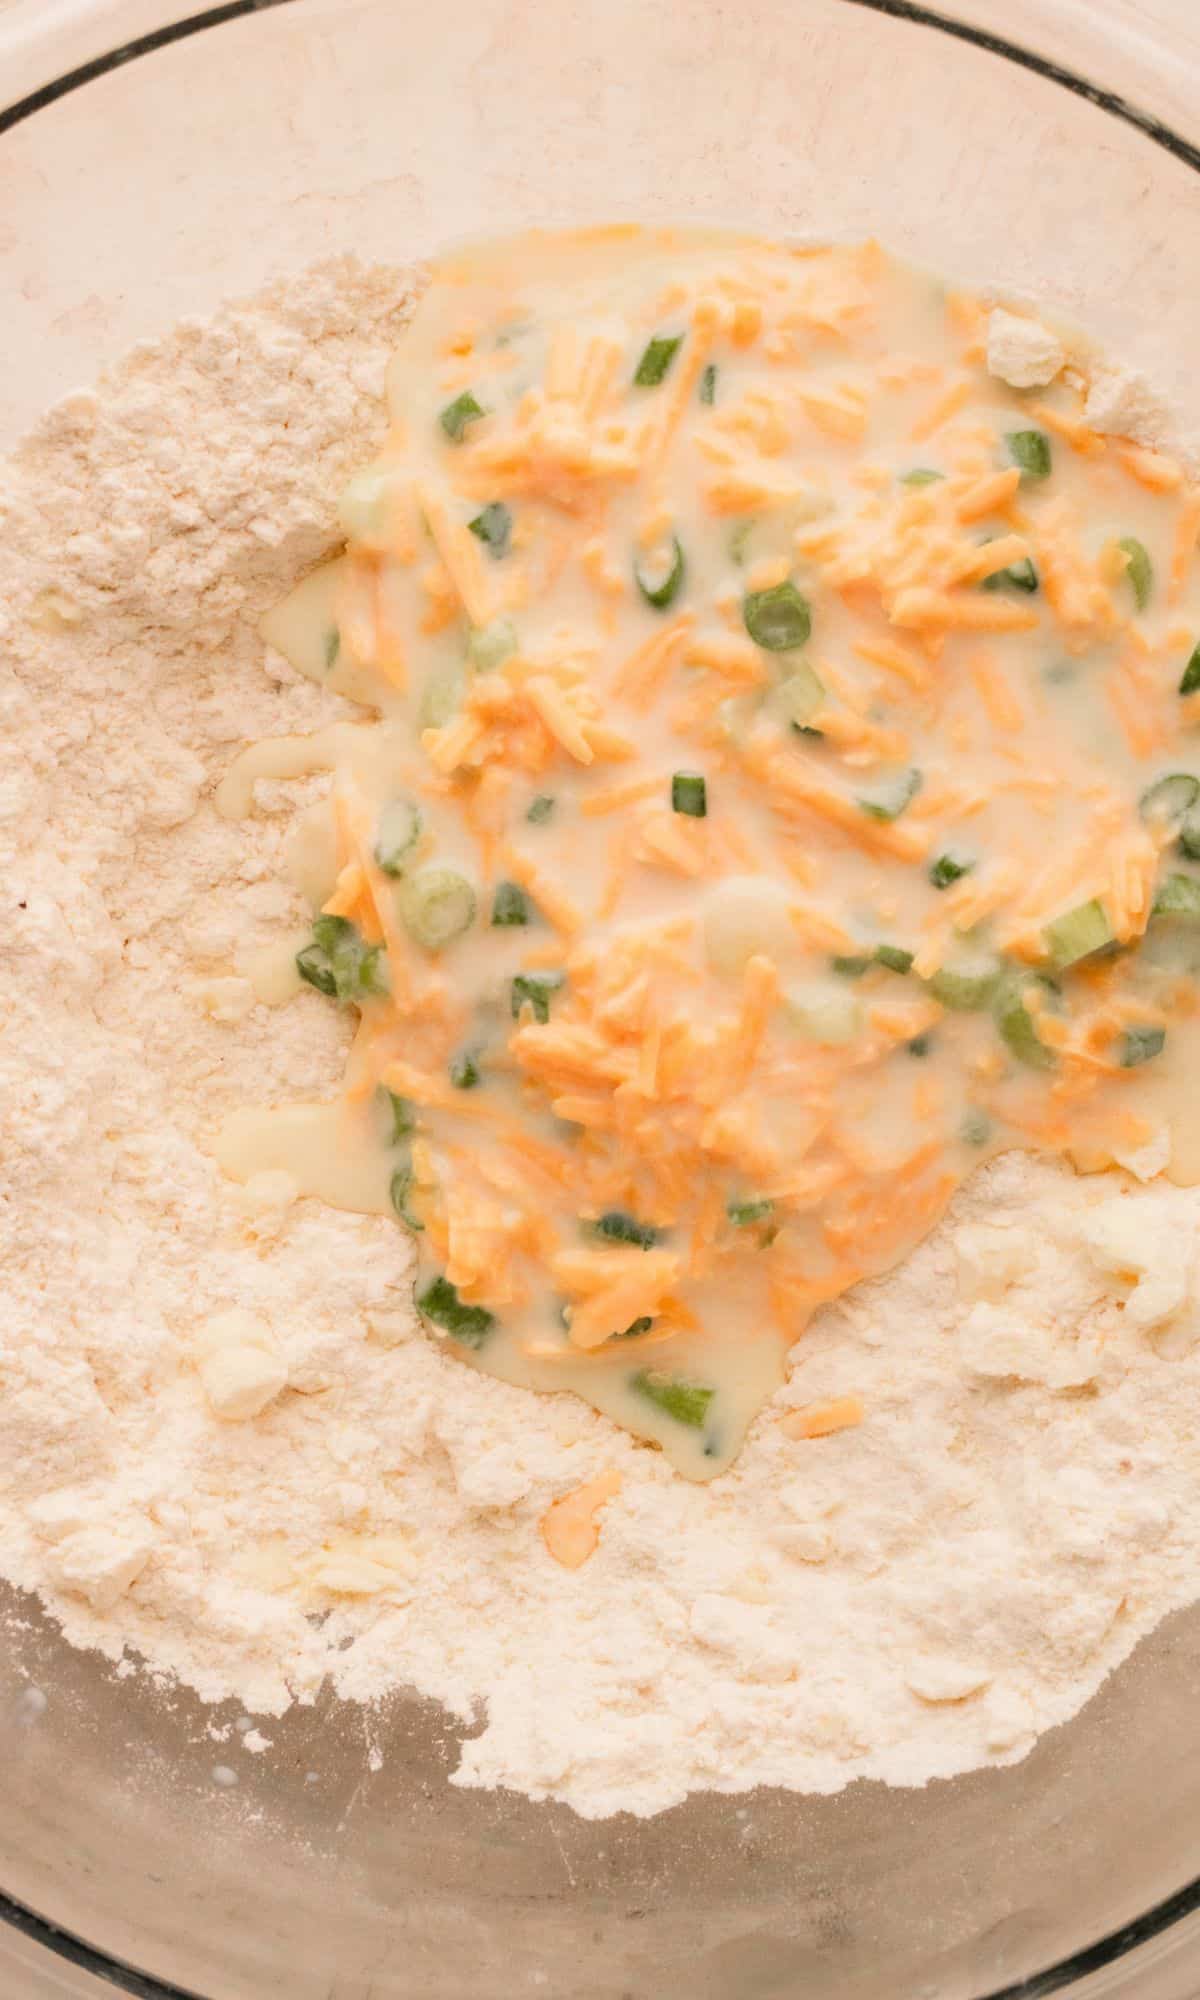 Mini cheddar scone dough preparation.